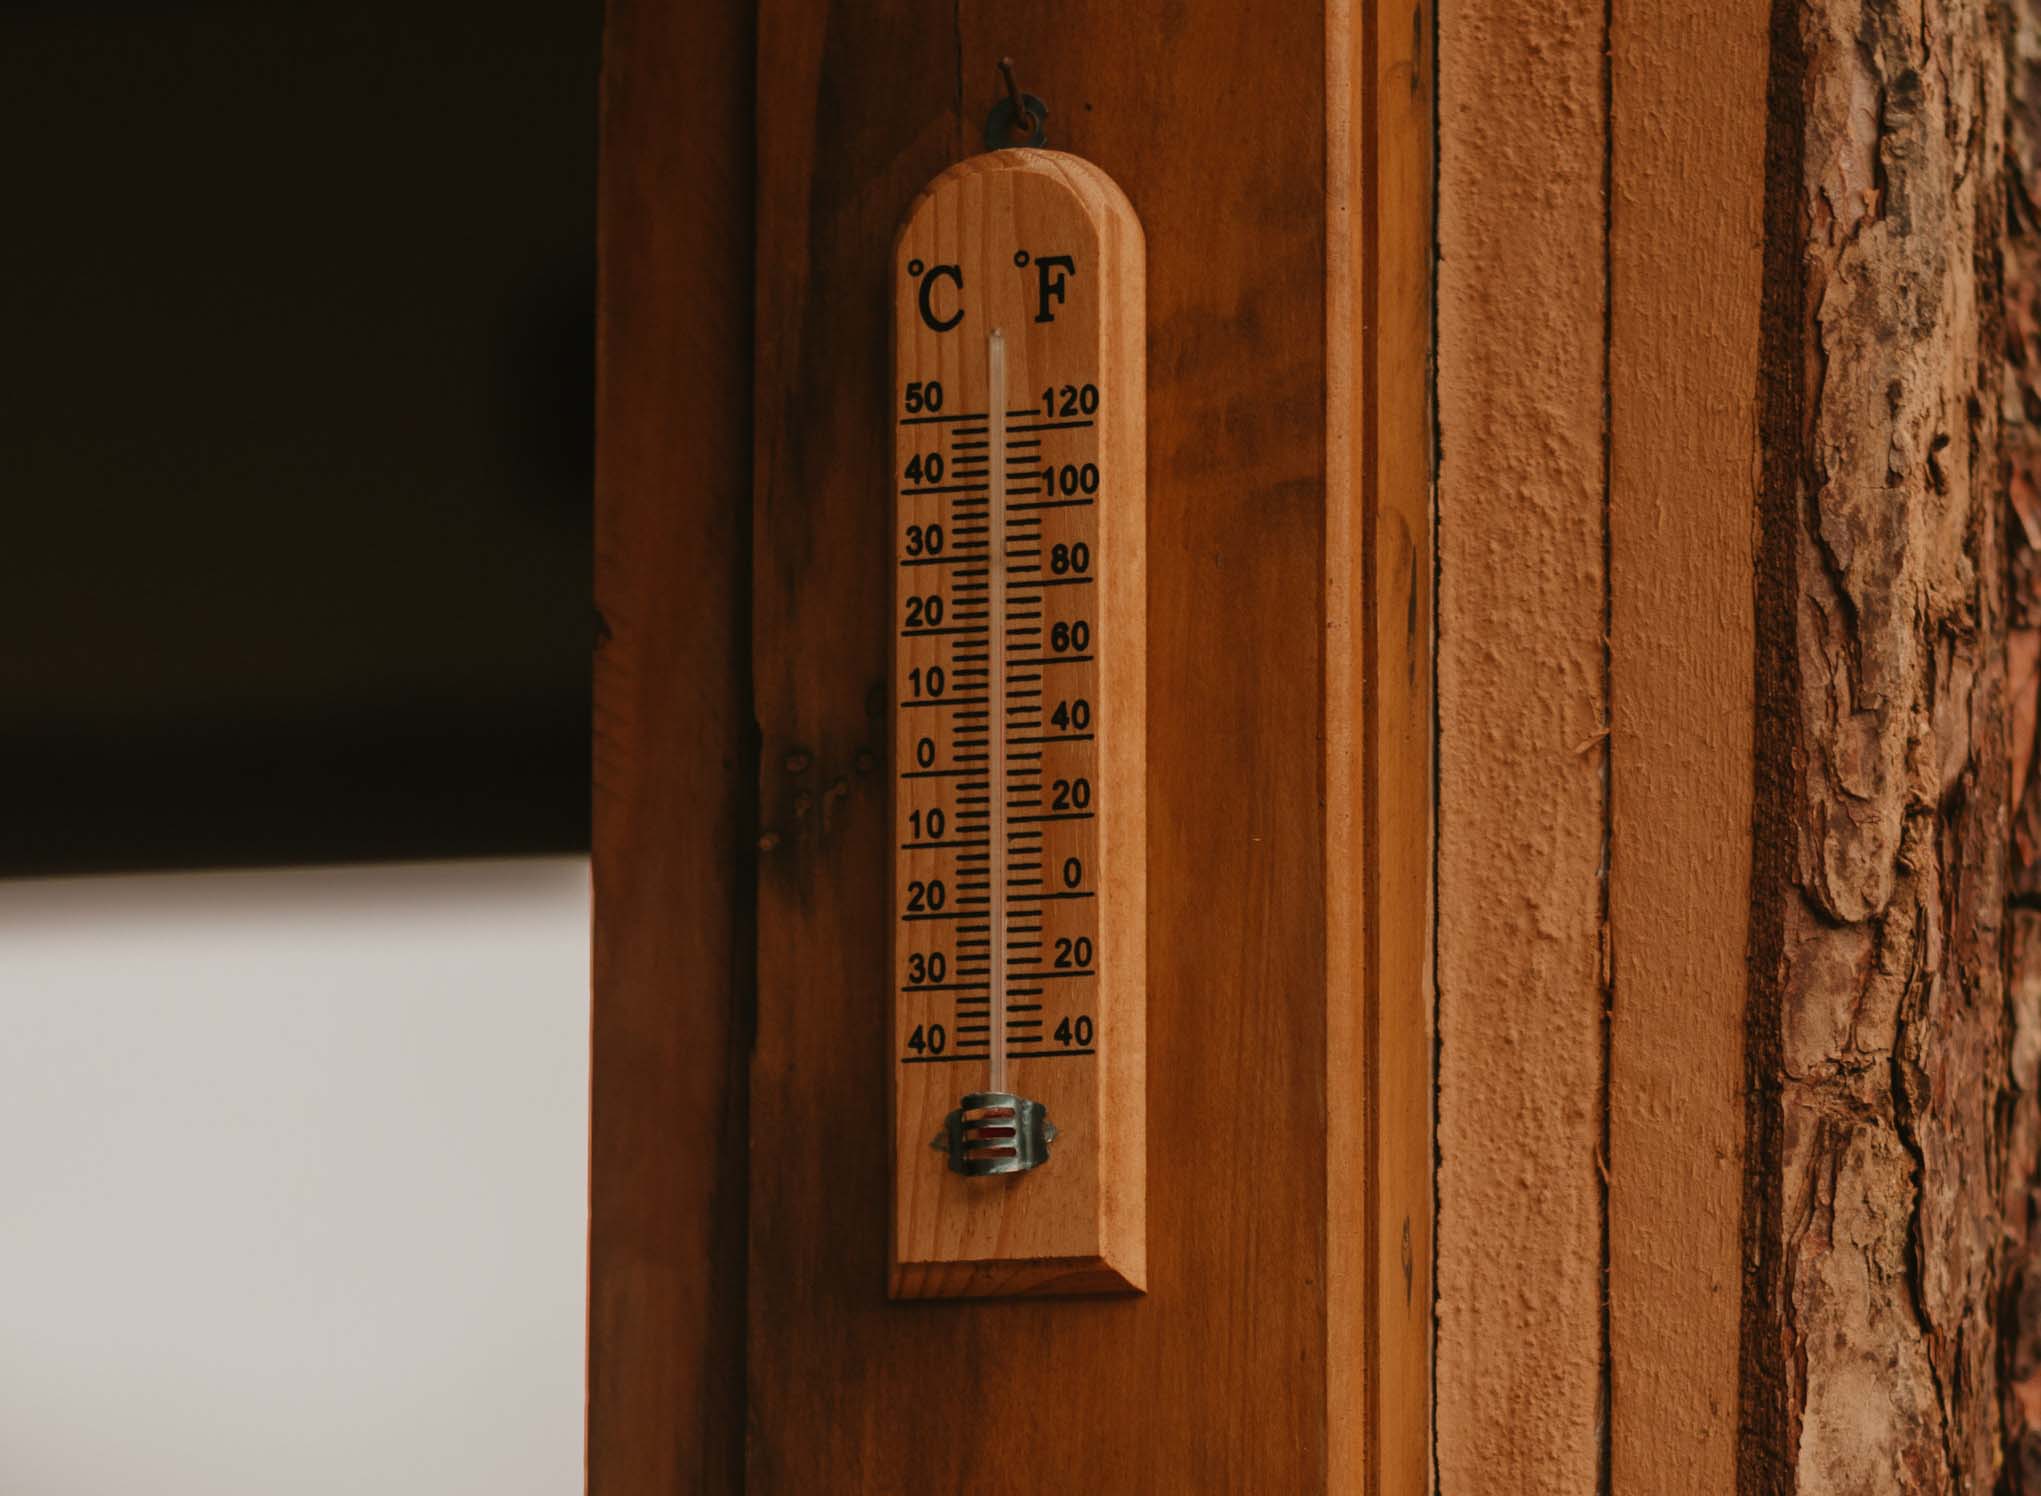 Record temperaturen in Malaga deze winter